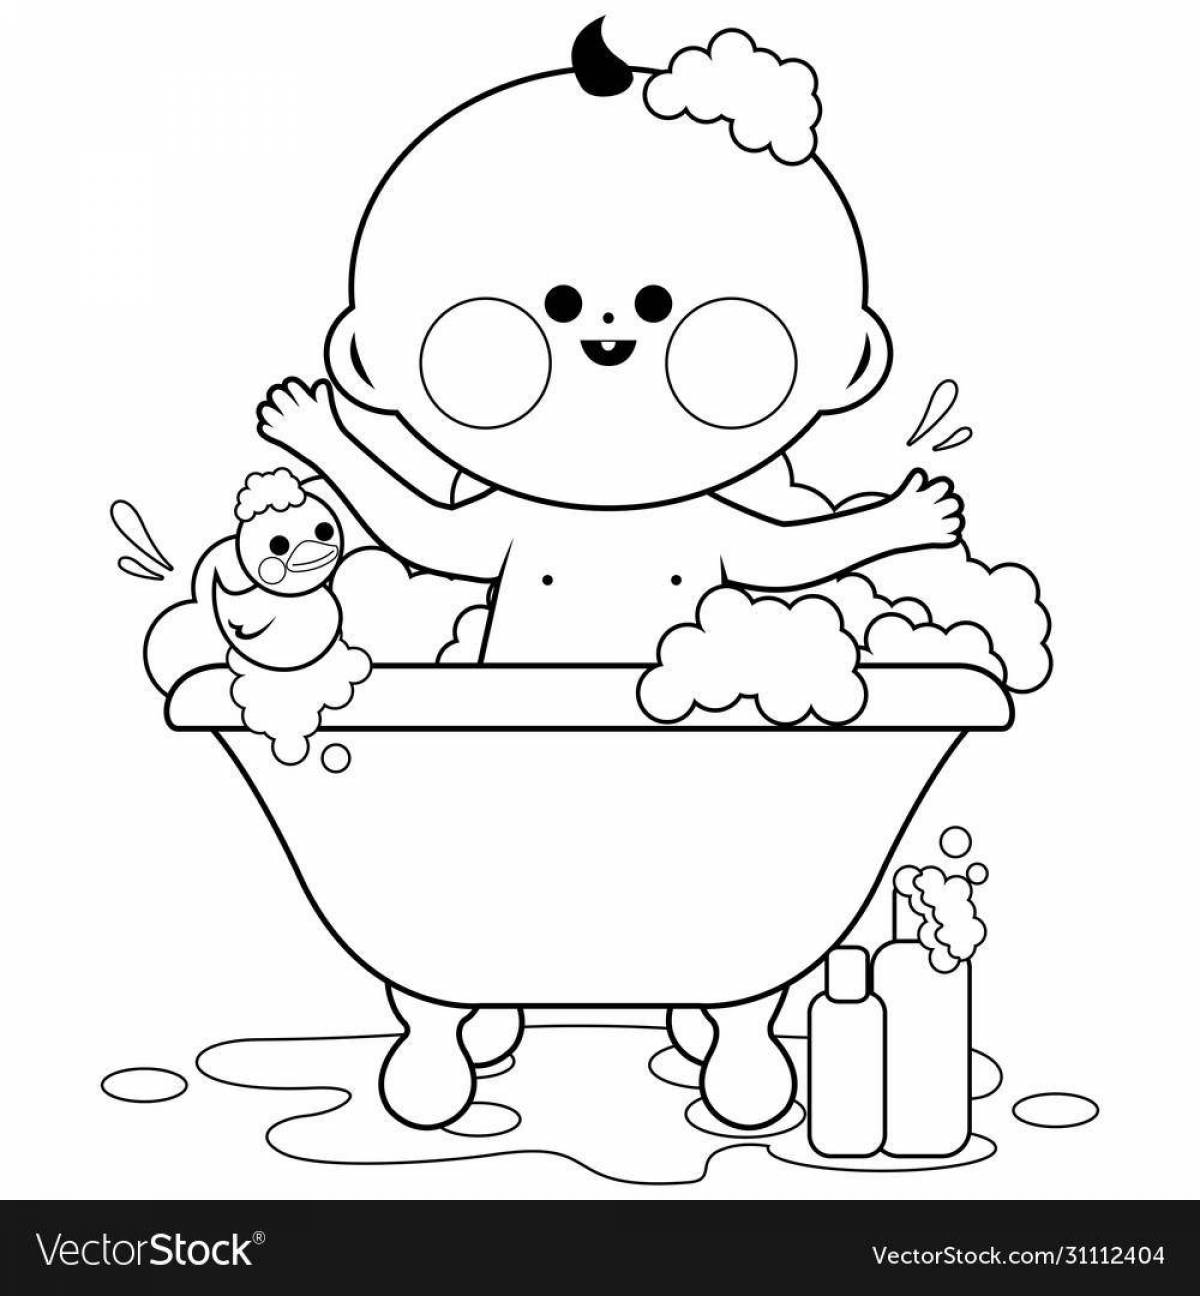 Children's bath coloring book